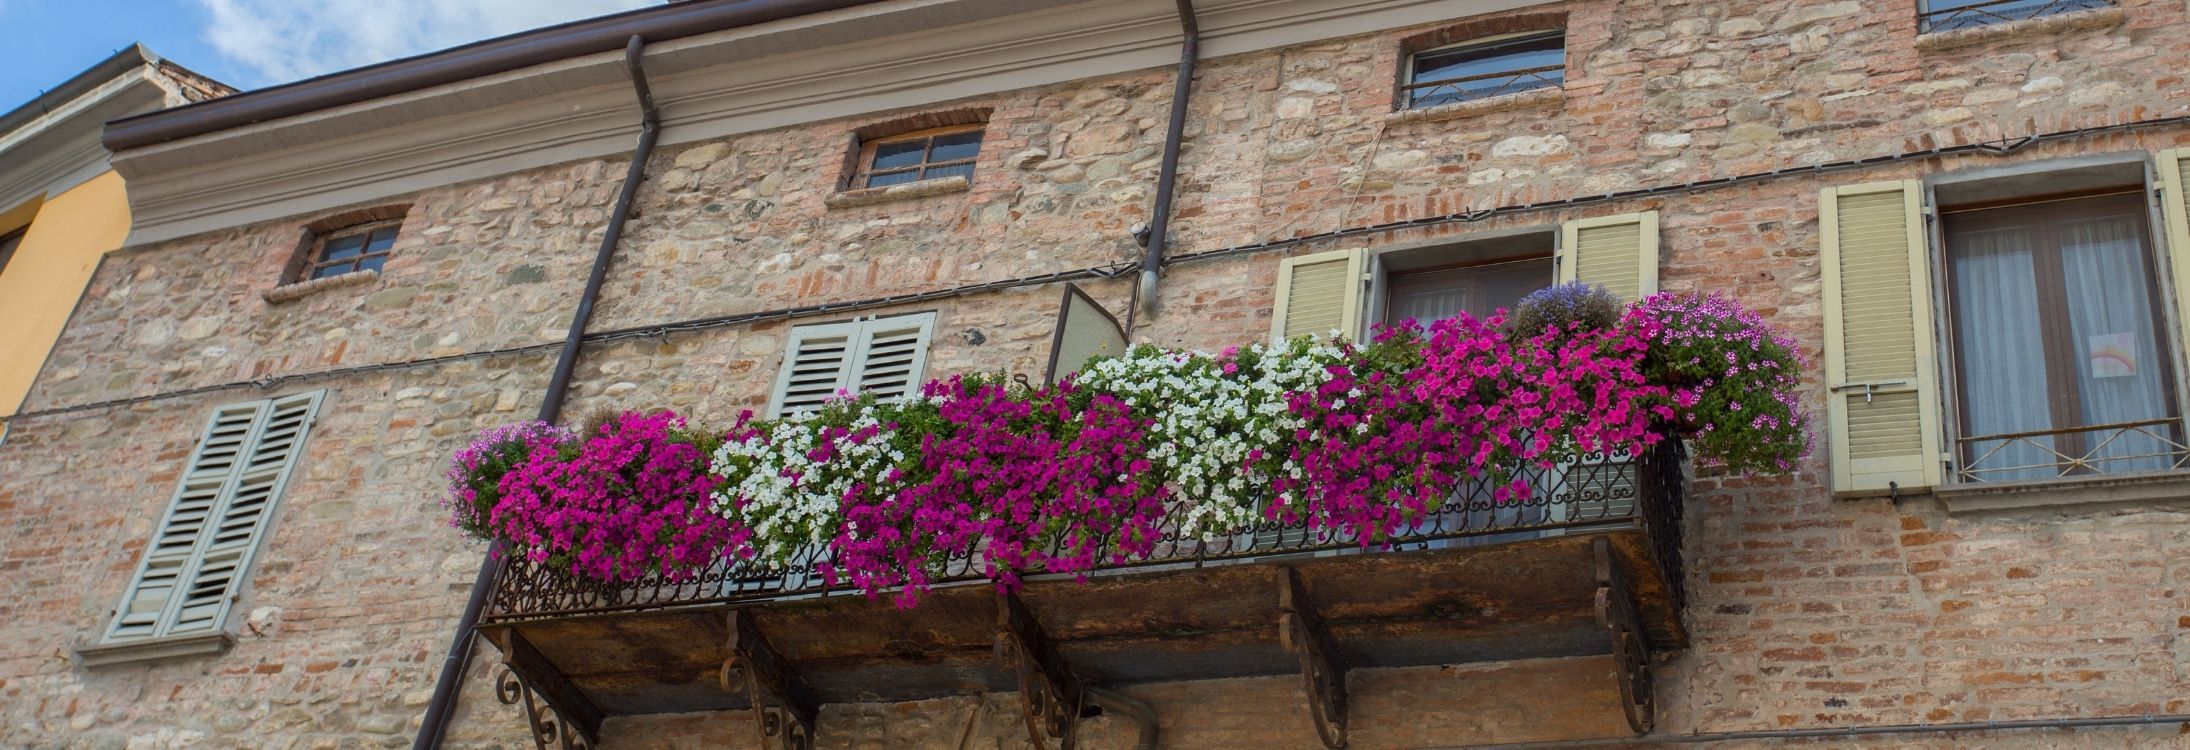 Balconies in Italy